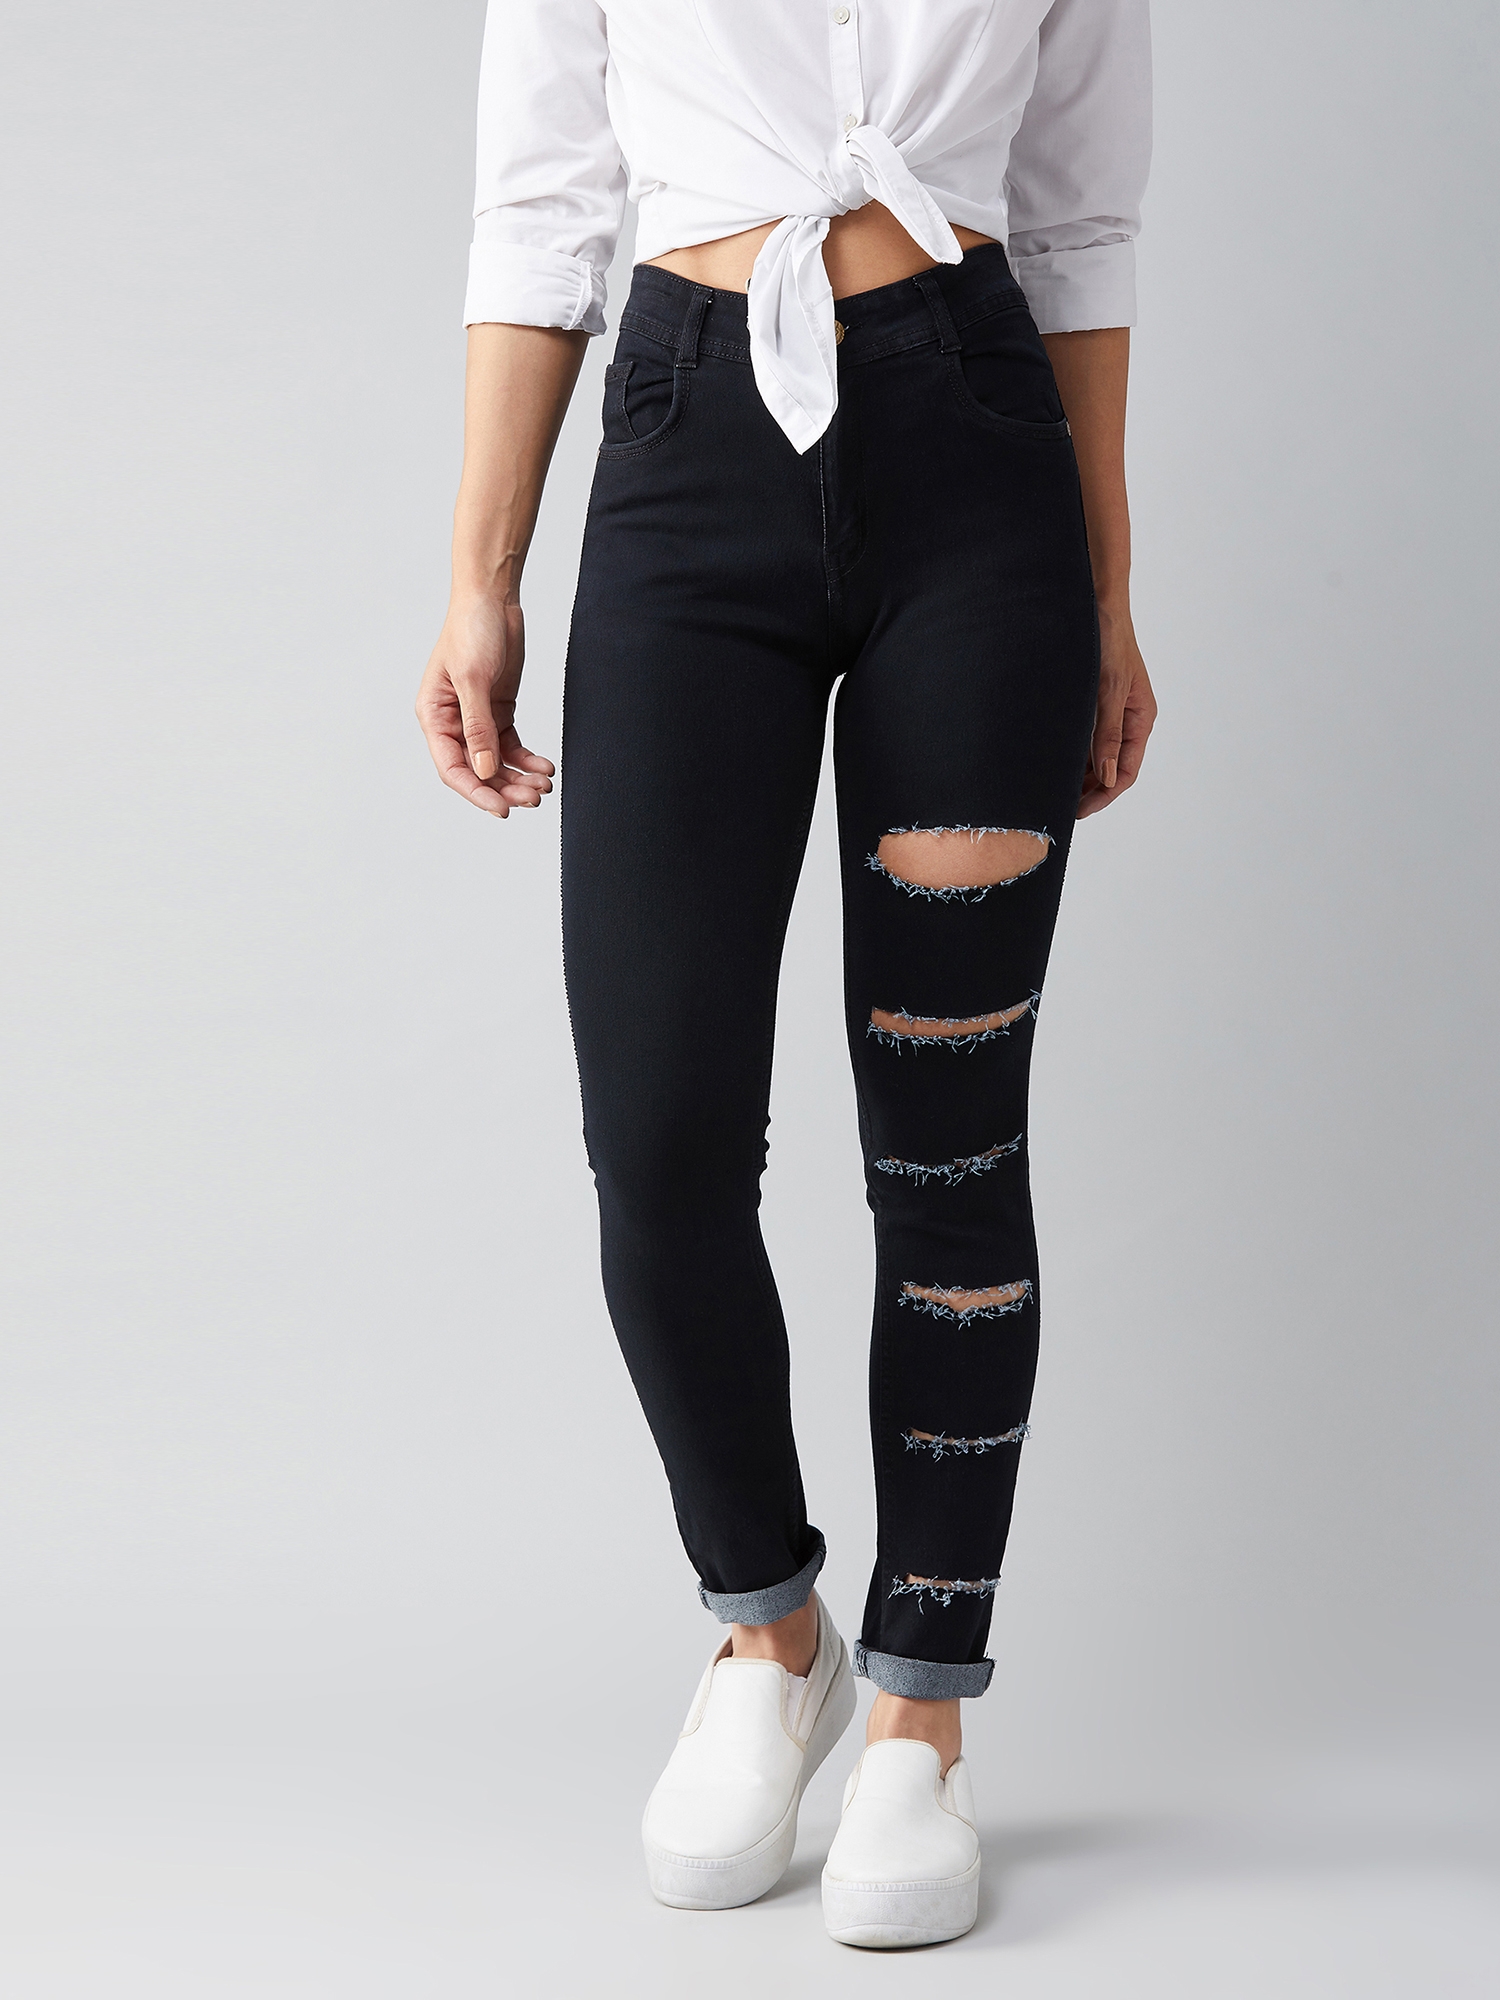 Women's Black Slim High Rise Clean Look Regular Denim Jeans